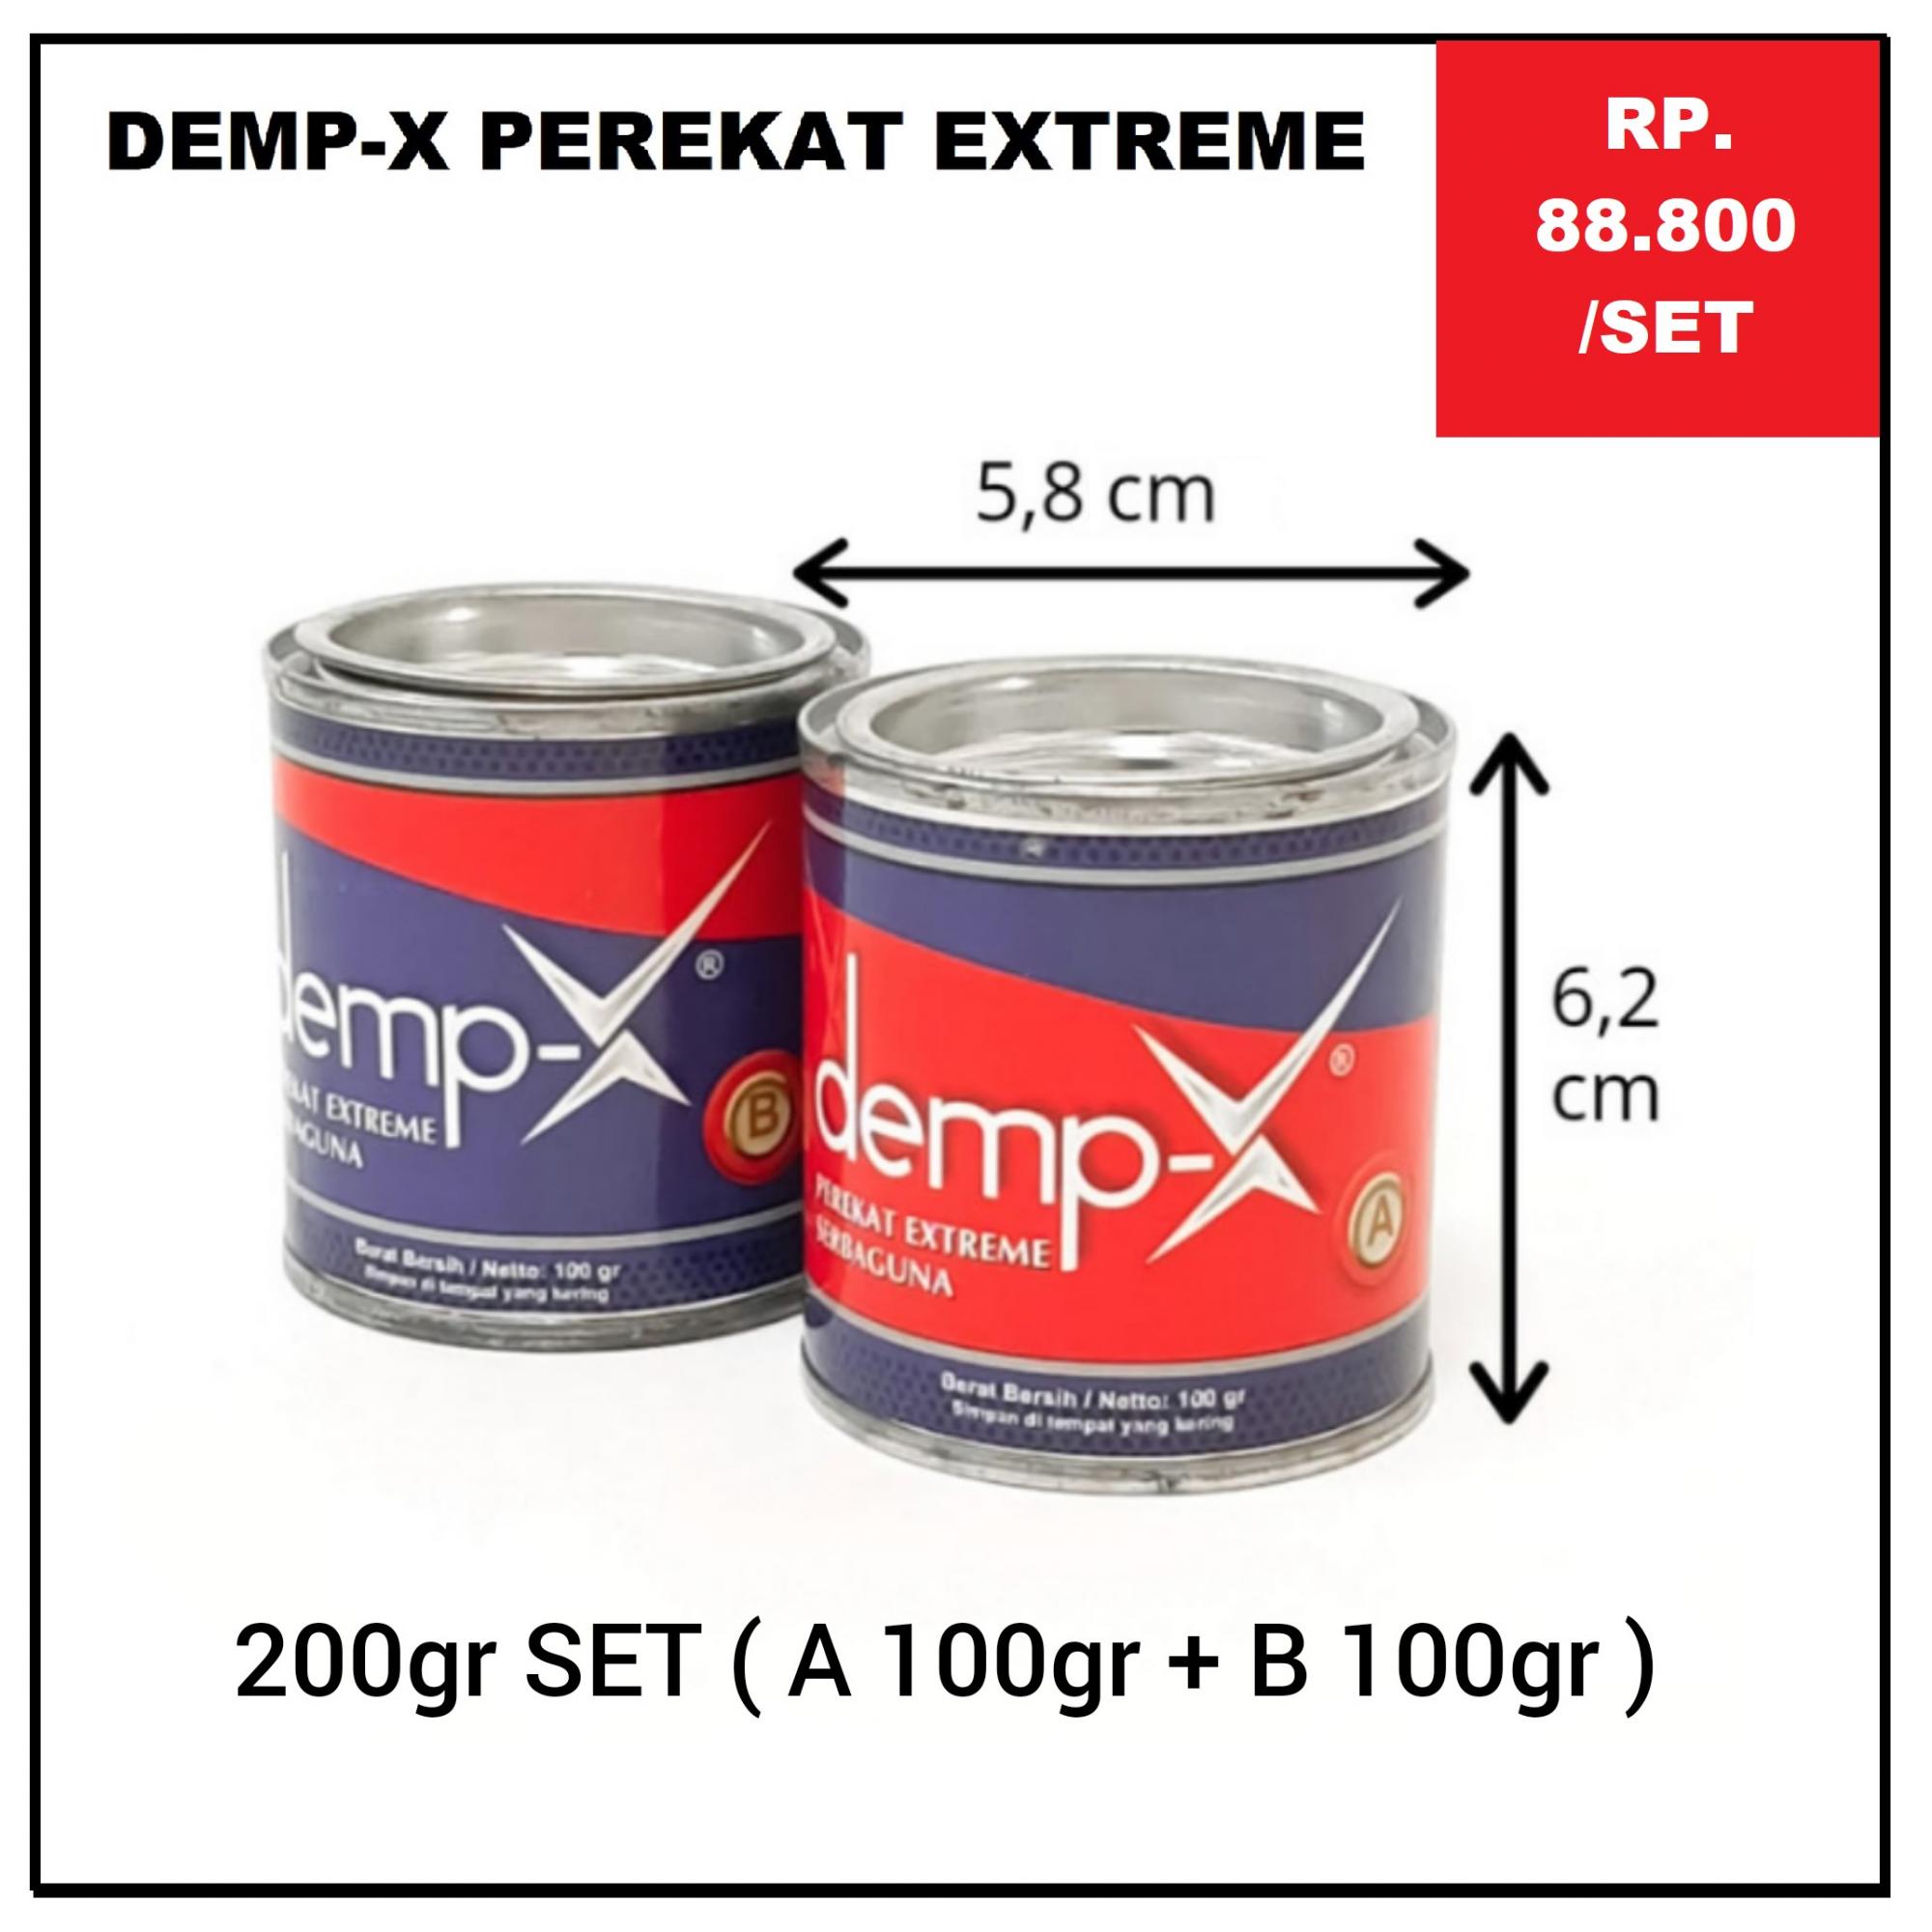 DEMP-X Perekat Extreme 200gr SET (A 100gr + B 100gr) 